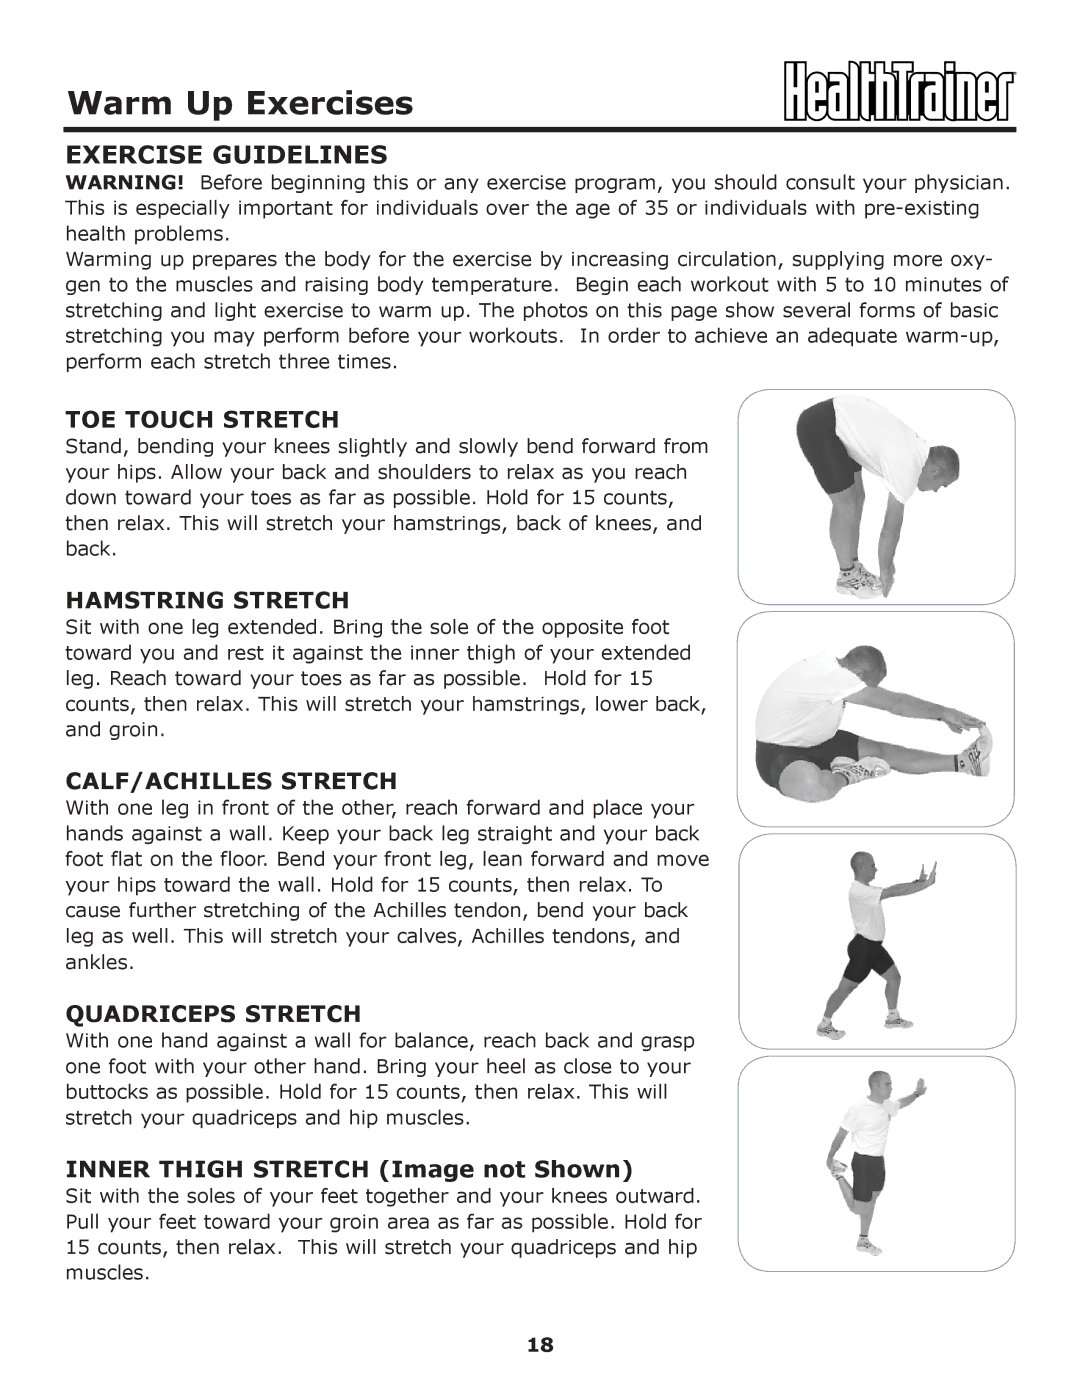 Keys Fitness HT-ELITE owner manual Warm Up Exercises, Exercise Guidelines 